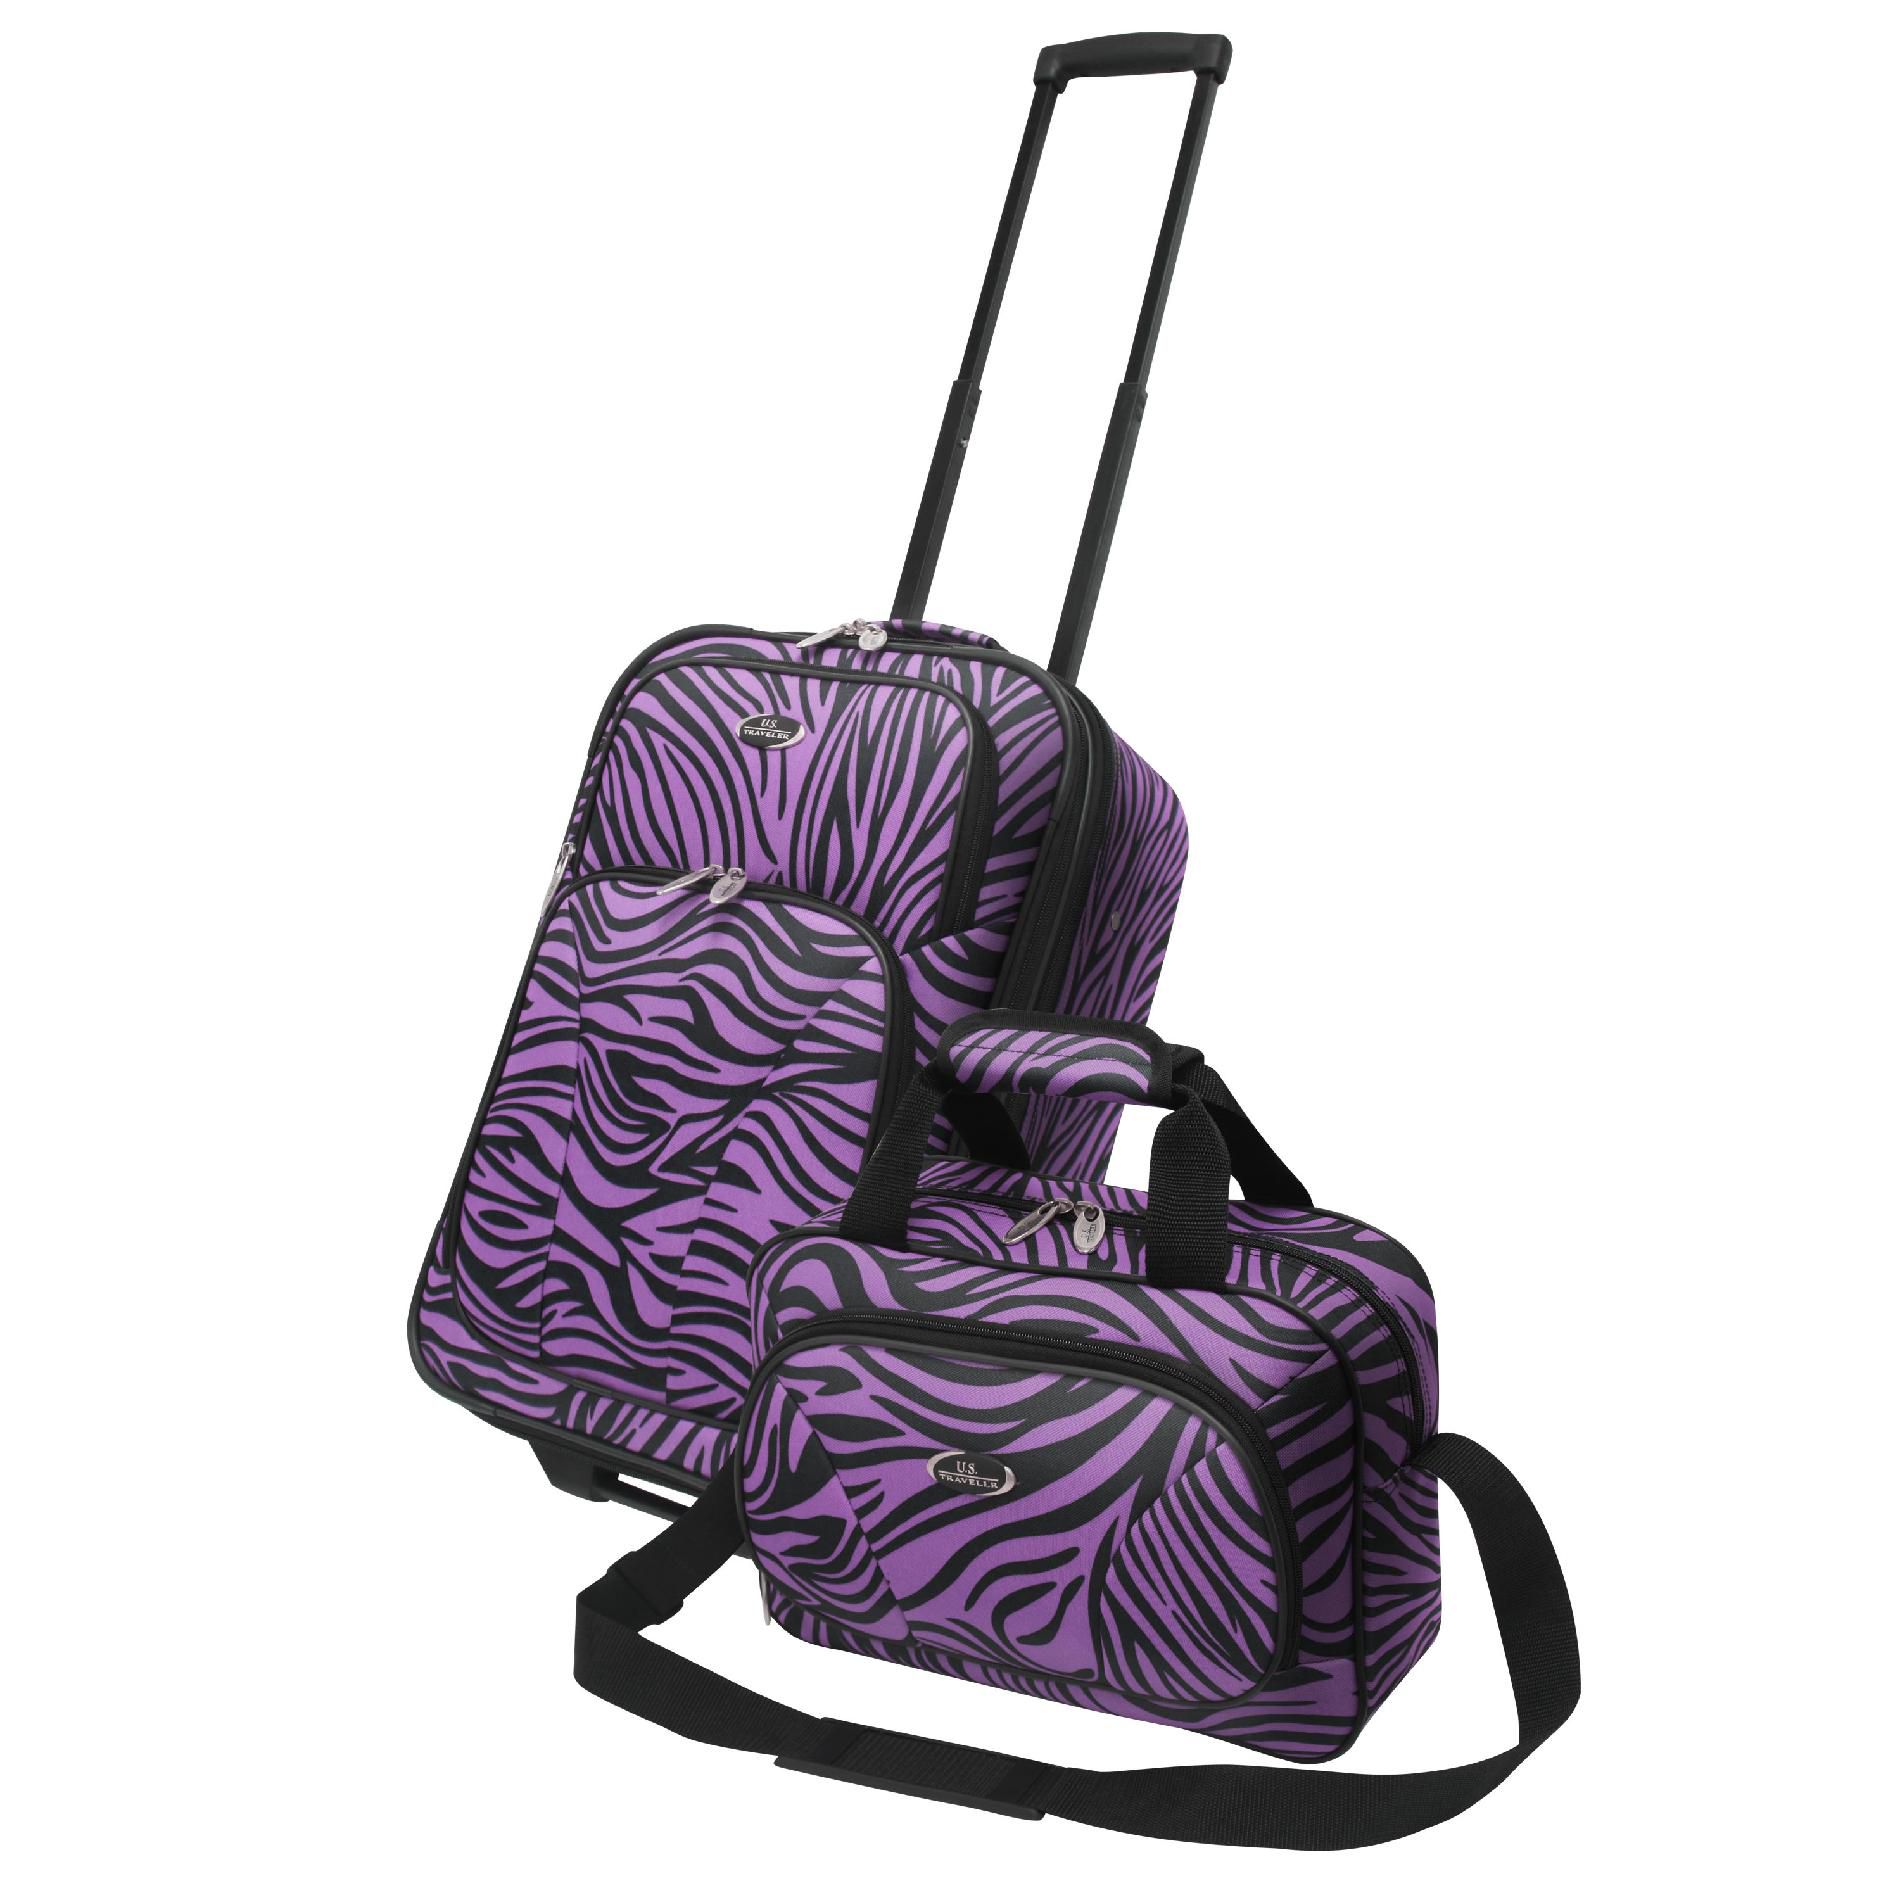 U.S. Traveler Fashion 2-piece Carry-On Luggage Set, Purple Zebra Print